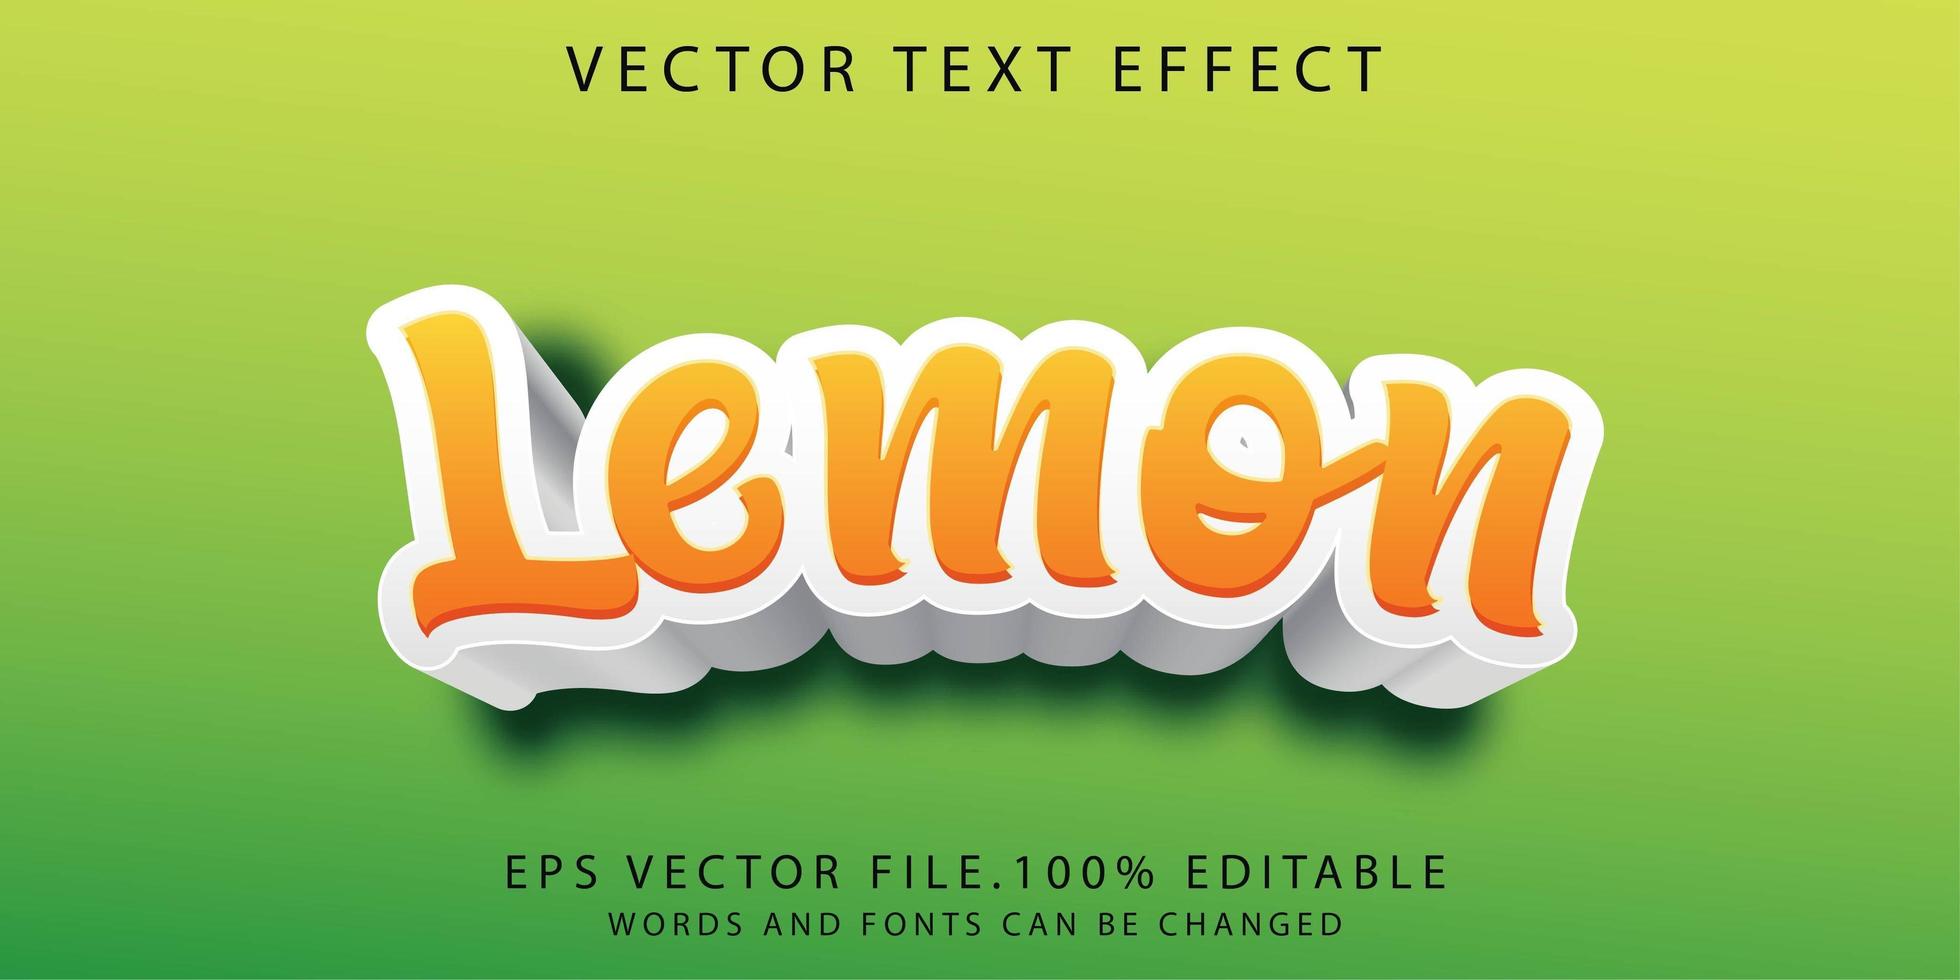 teksteffect citroen vector